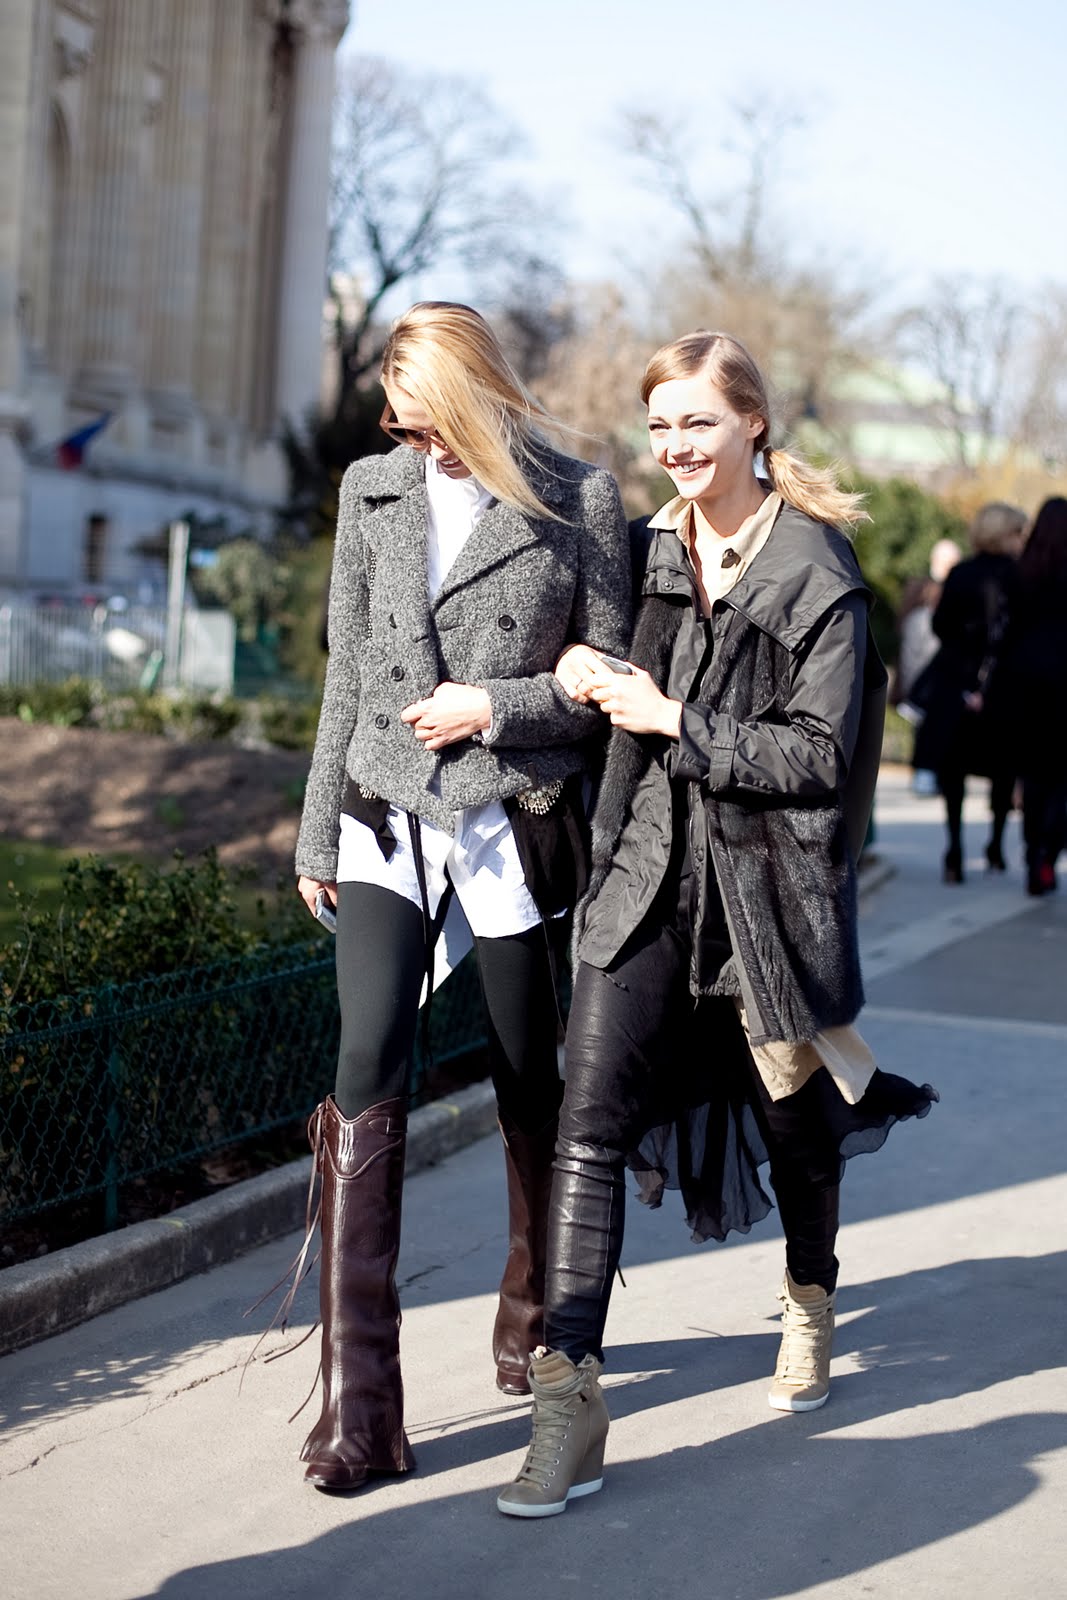 ALTAMIRANYC: At Chanel: Anno Dello Russo arrives, Natasha Poly & Sasha ...